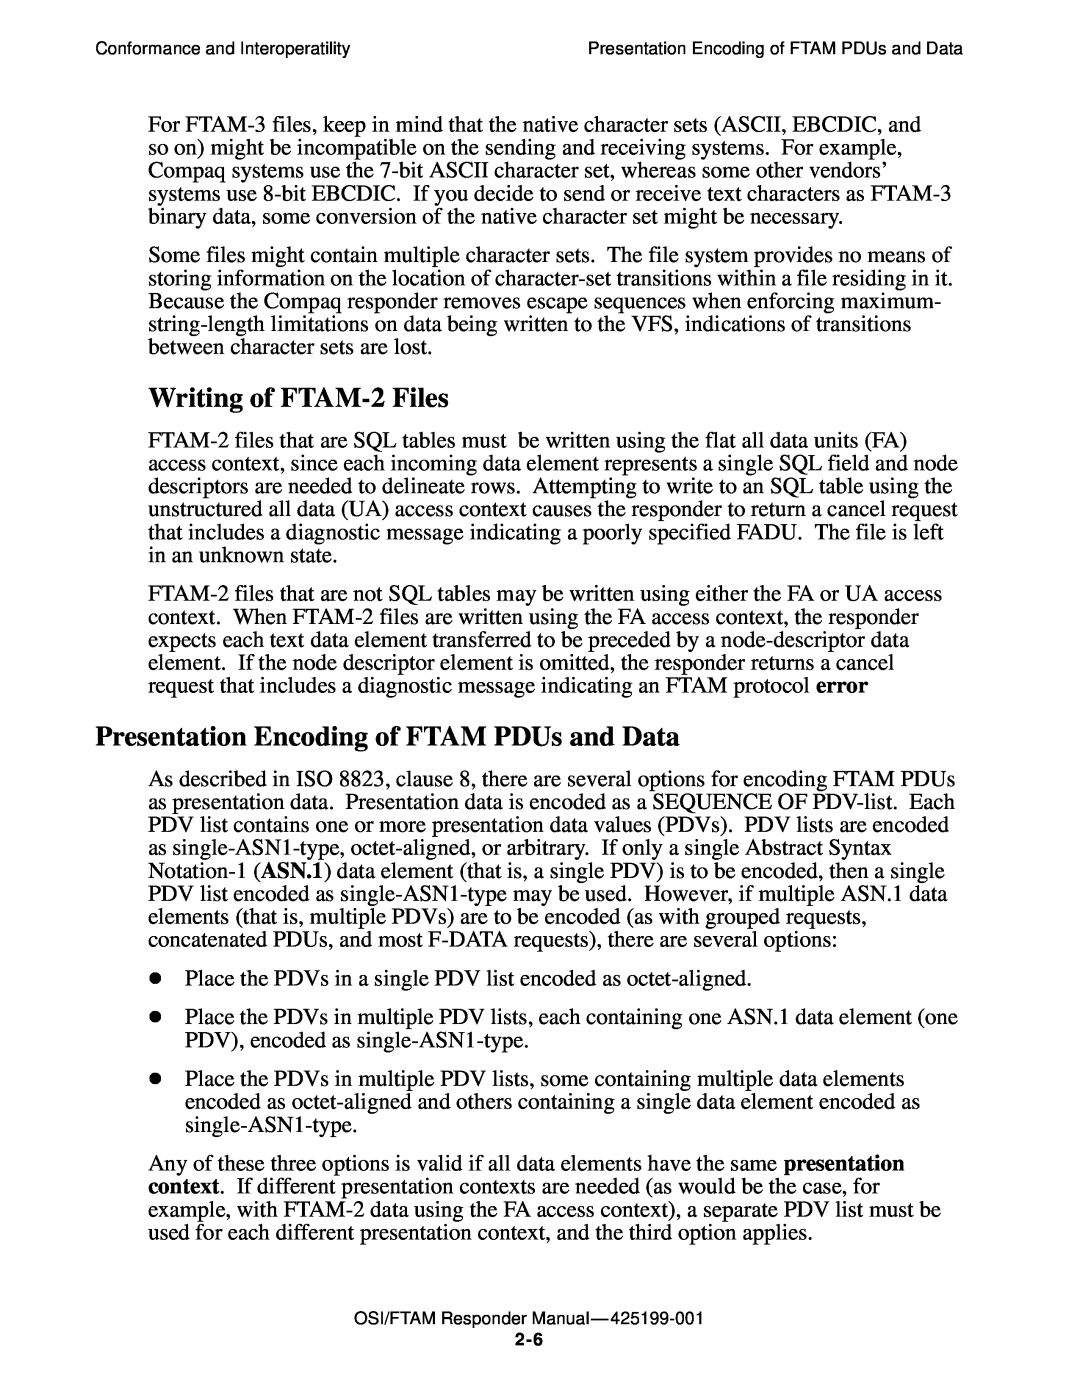 Compaq OSI/APLMGR D43, OSI/FTAM D43 manual Writing of FTAM-2 Files, Presentation Encoding of FTAM PDUs and Data 